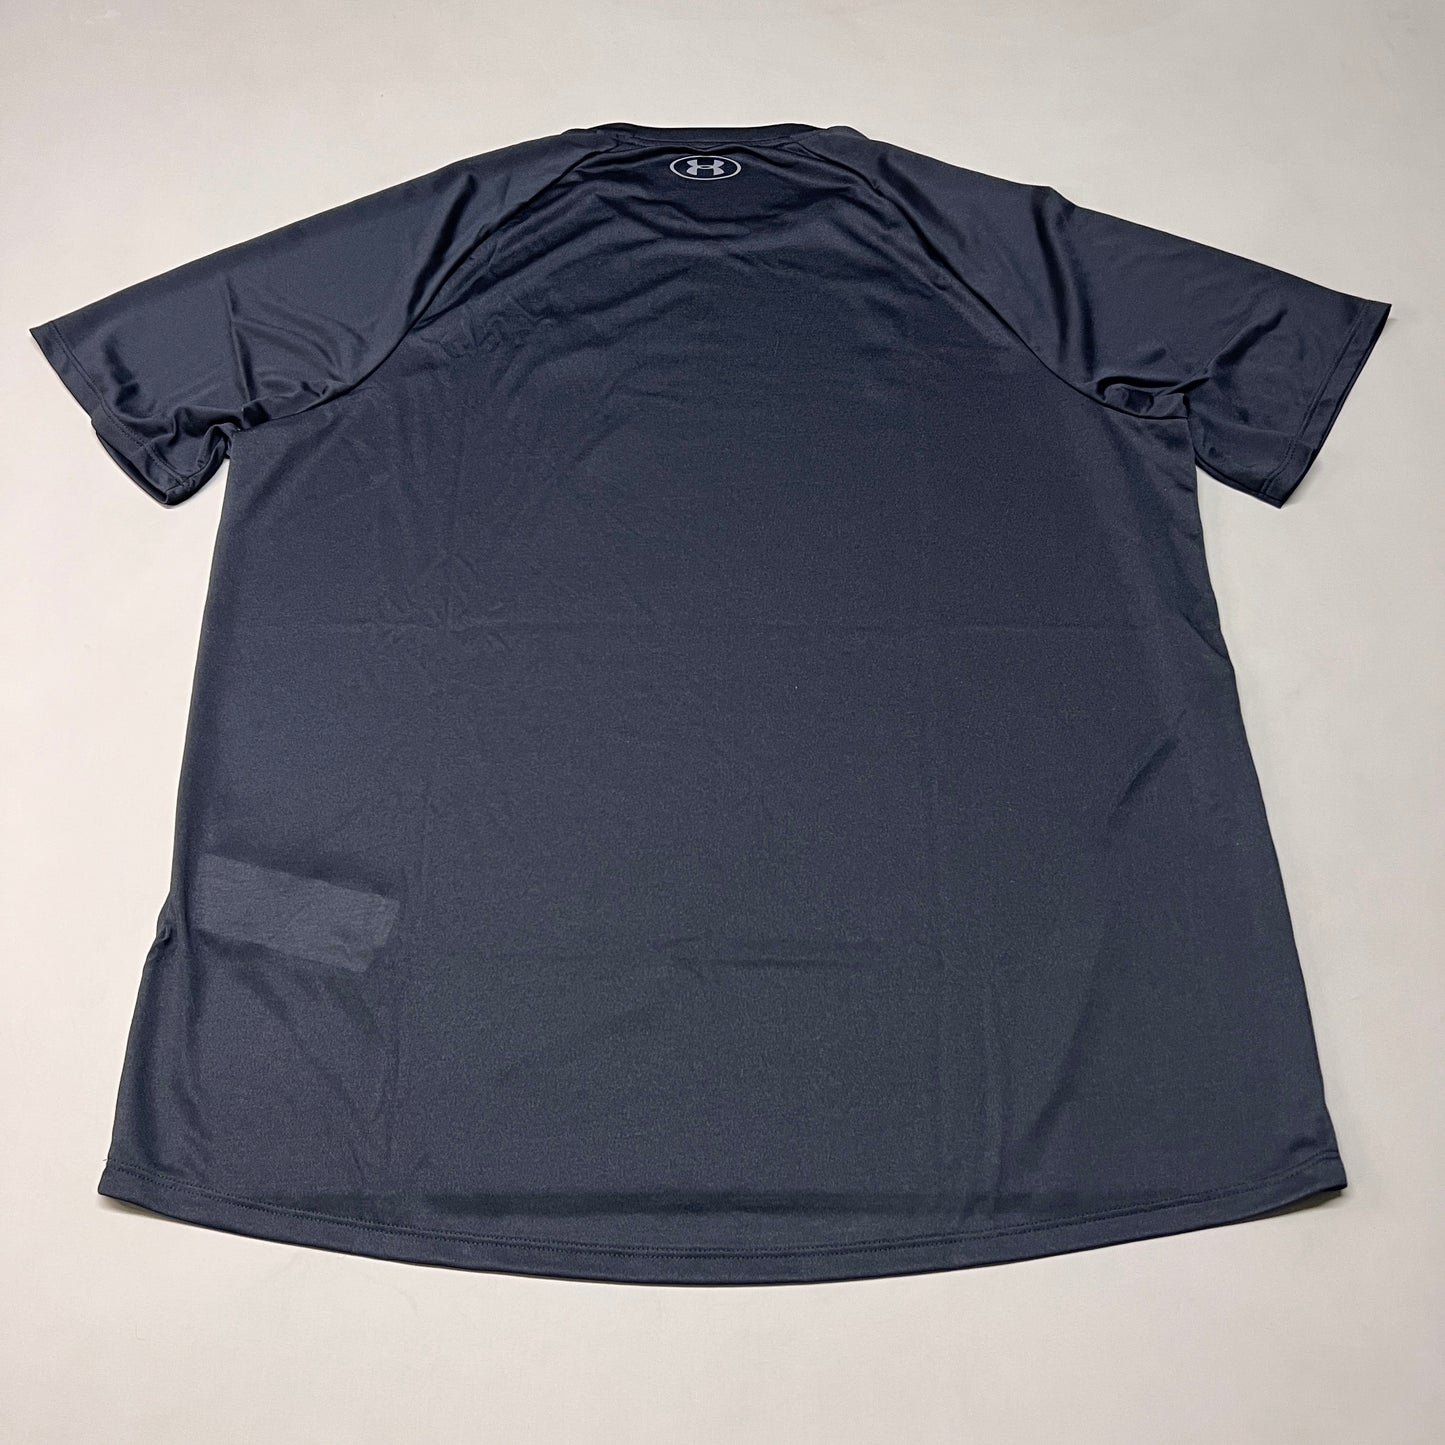 UNDER ARMOUR Tech 2.0 Short Sleeve Tee Men's Black / Graphite-001 Sz XL 1326413 (New)